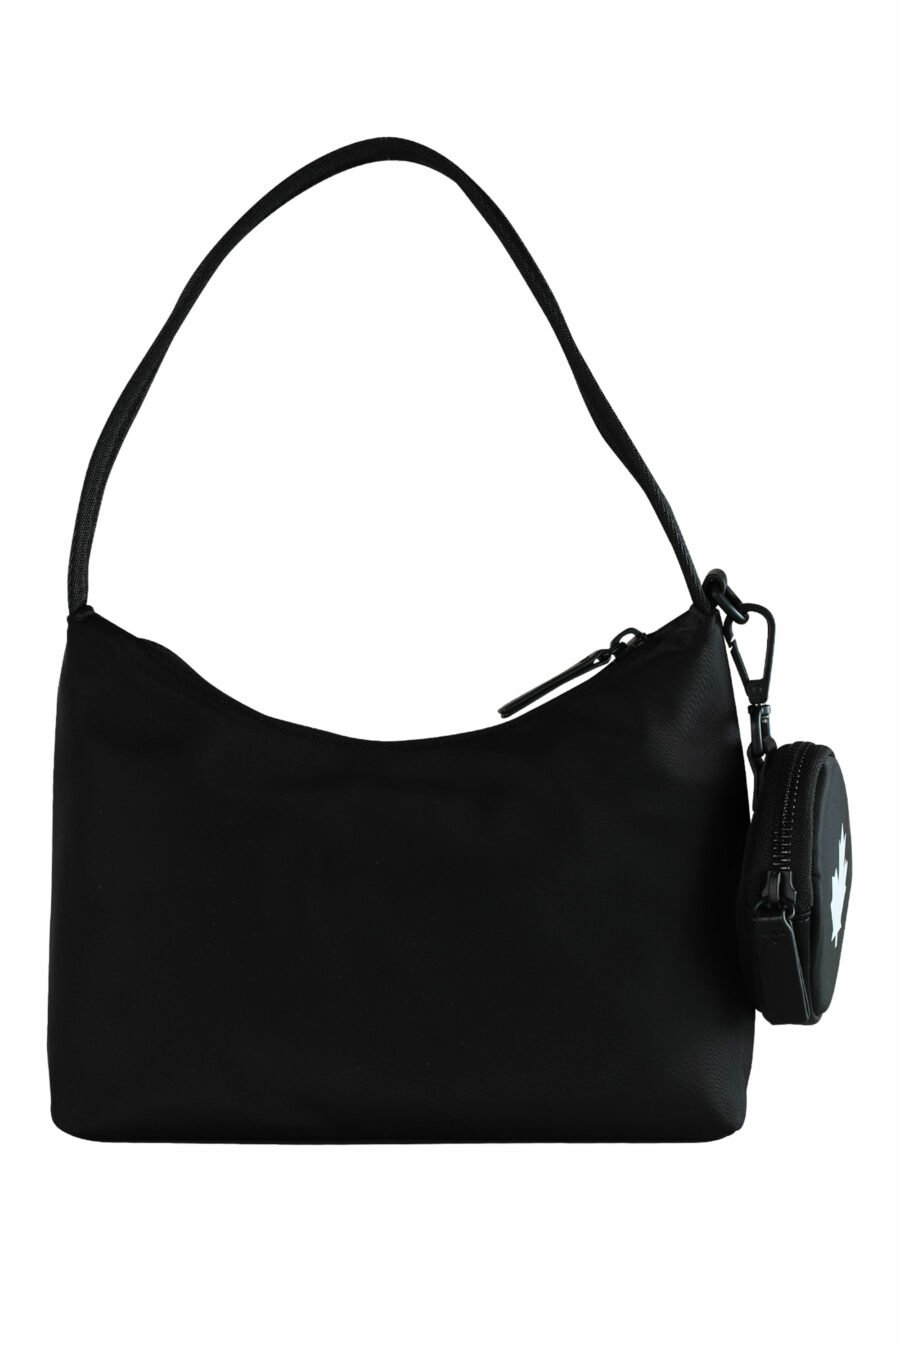 Black hobo style shoulder bag with "icon" logo - IMG 1246